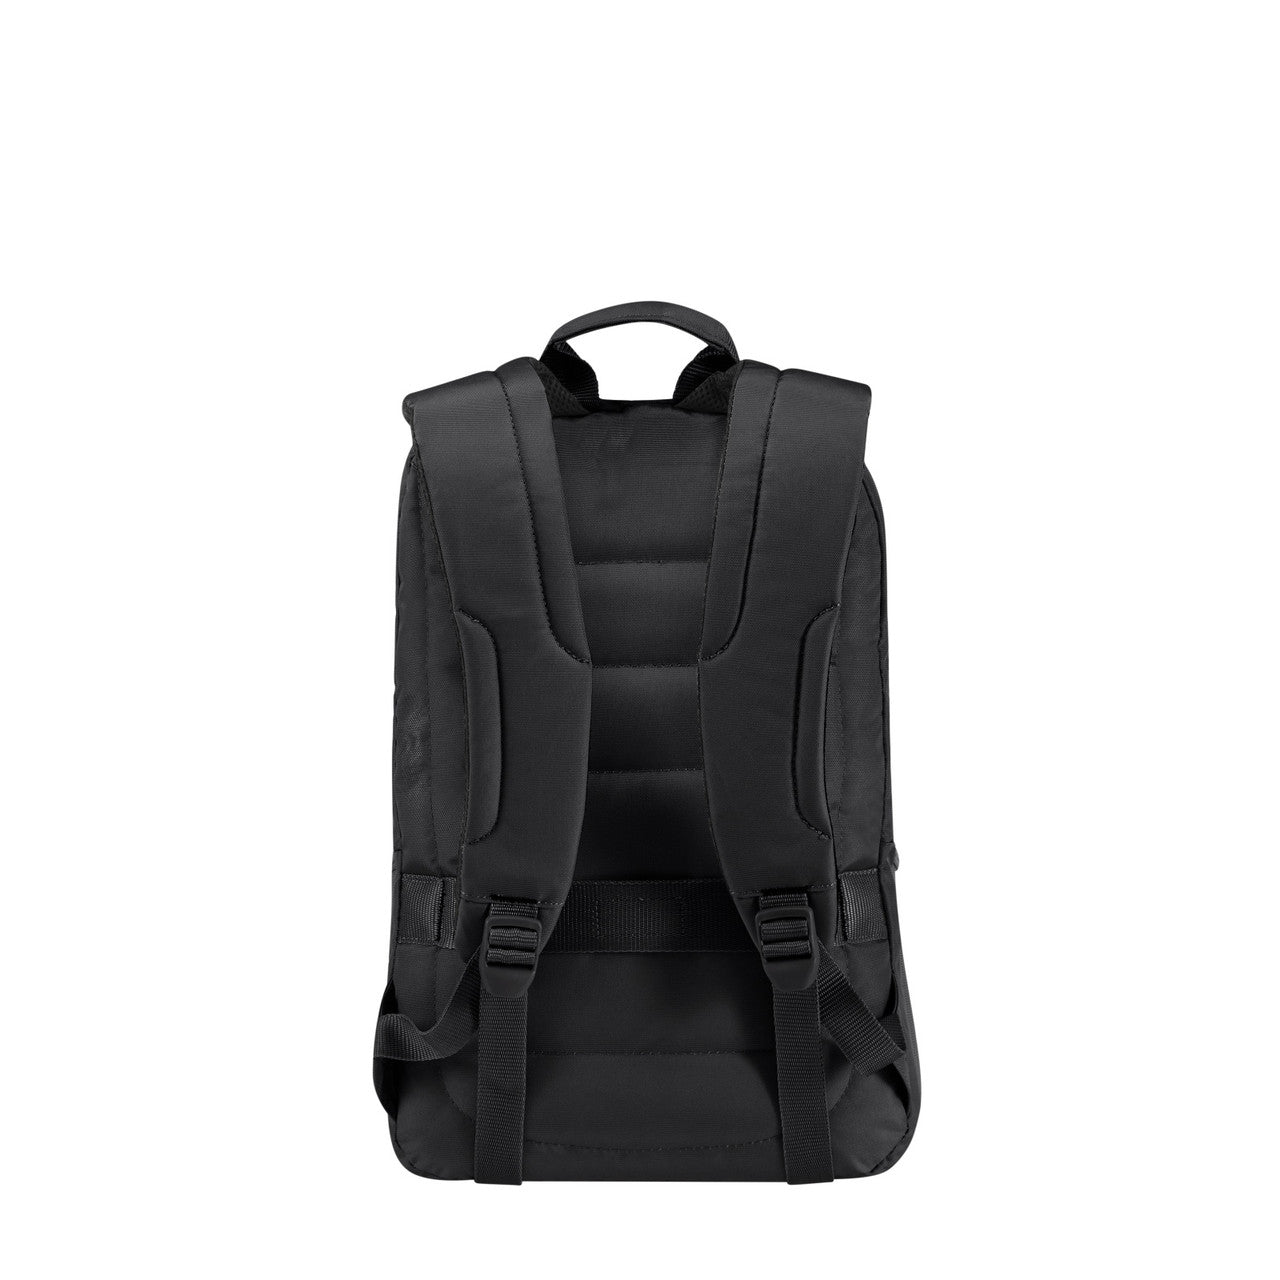 Samsonite - GUARDIT CLASSY 15.6in Backpack - Black-2